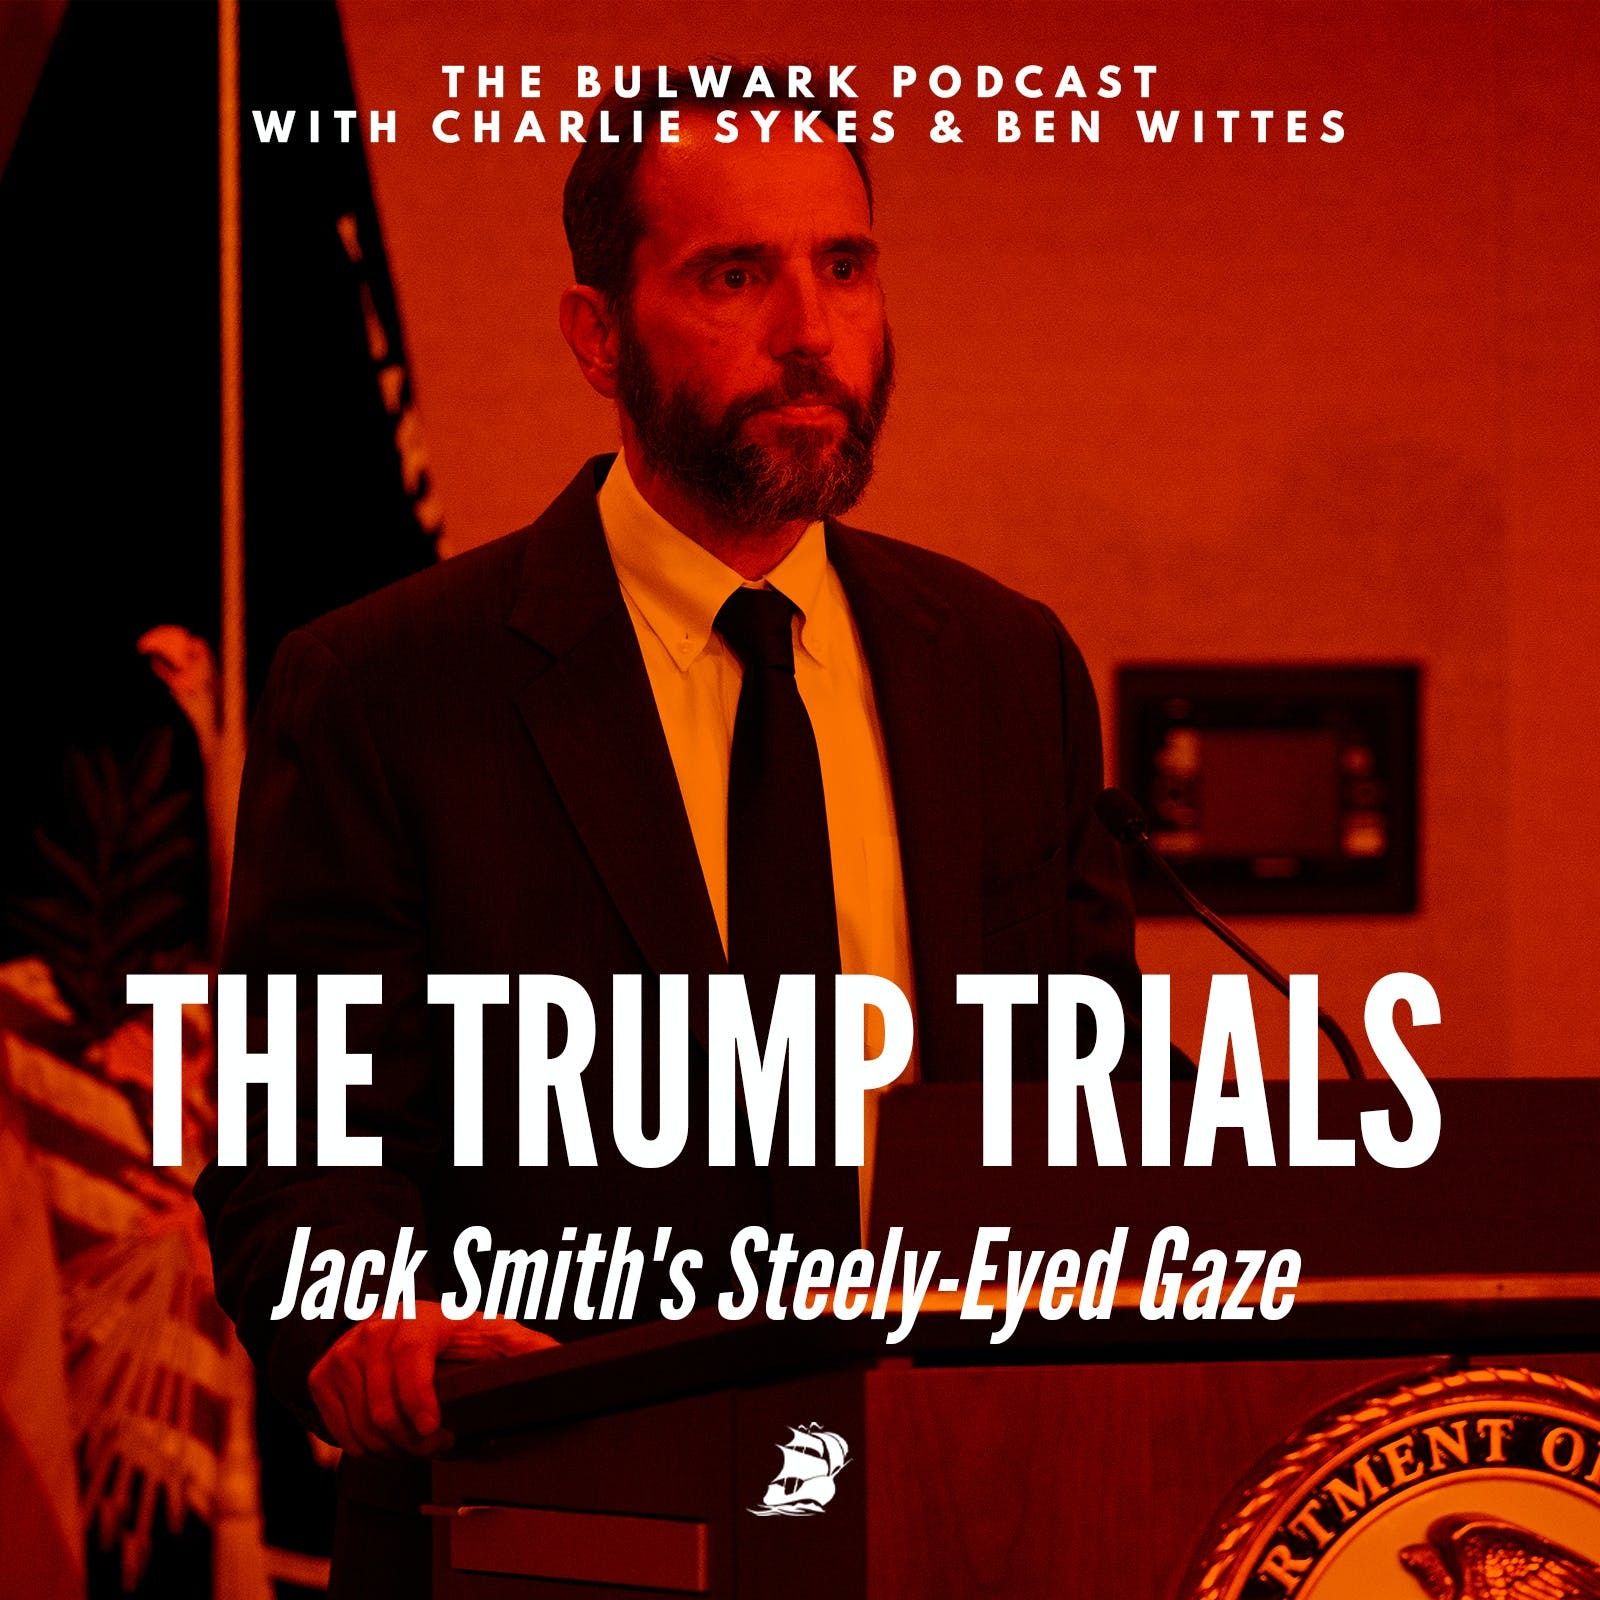 Jack Smith's Steely-Eyed Gaze by The Bulwark Podcast